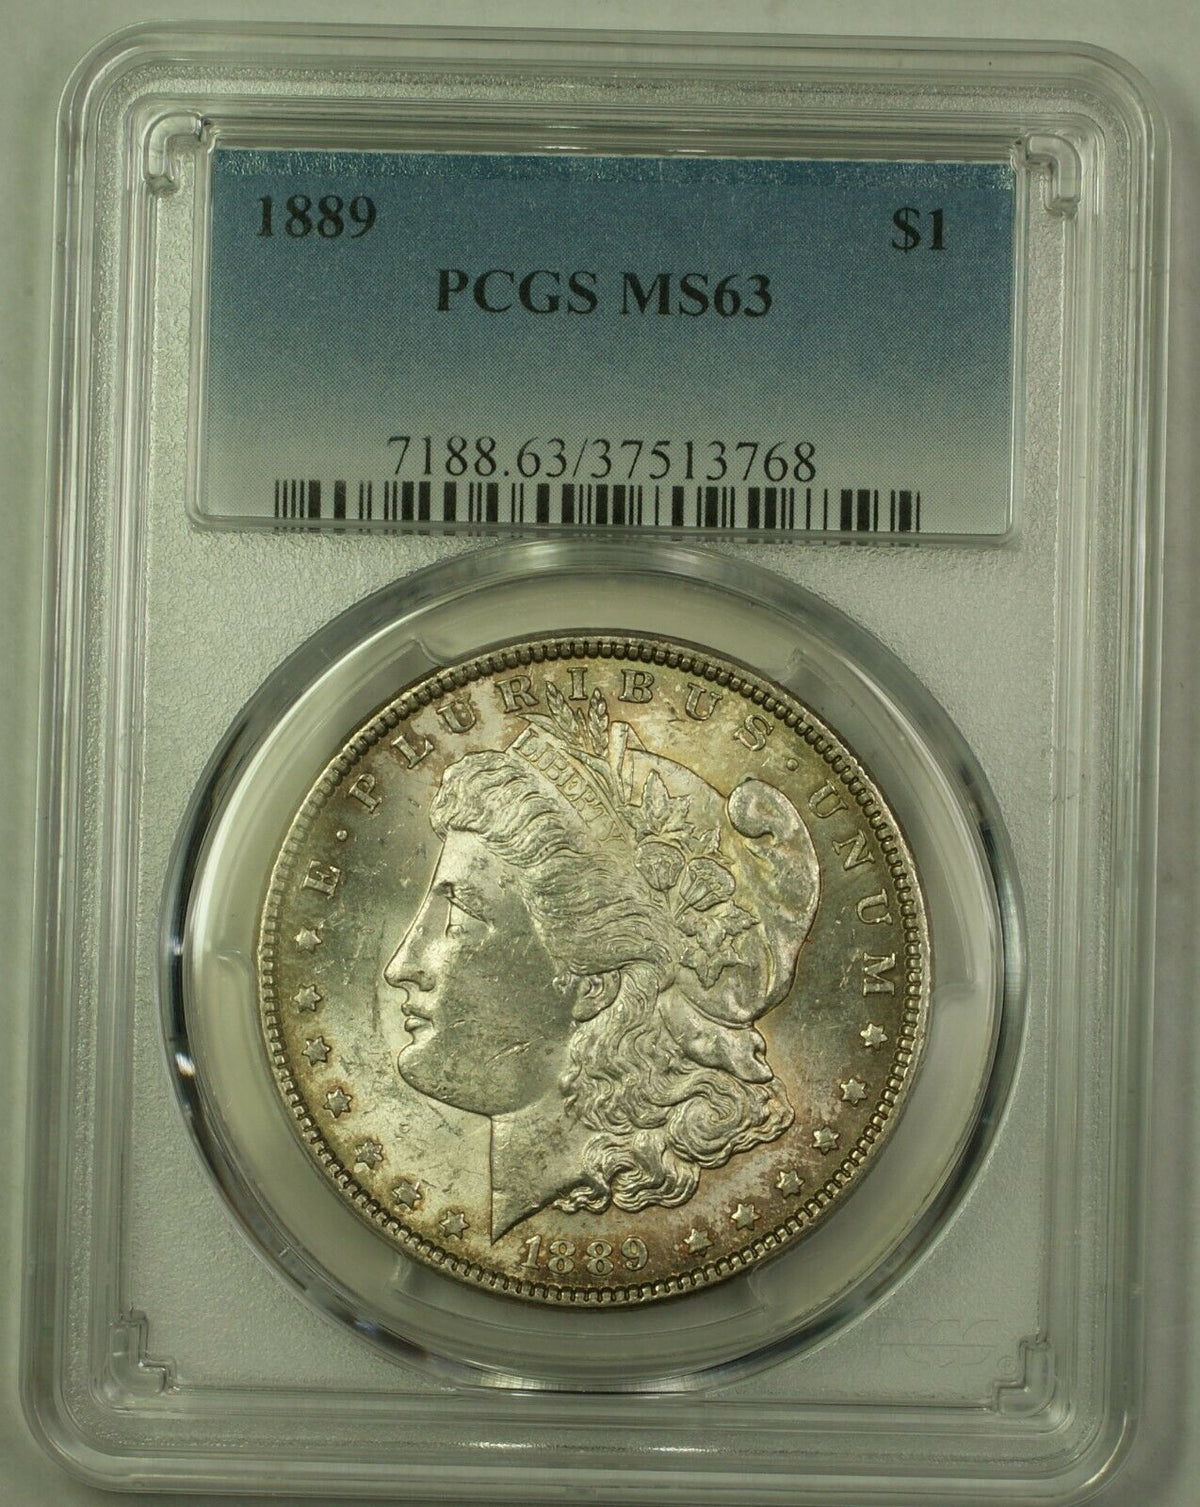 1889 Morgan Silver Dollar $1 PCGS MS-63 Light Toning (22B 